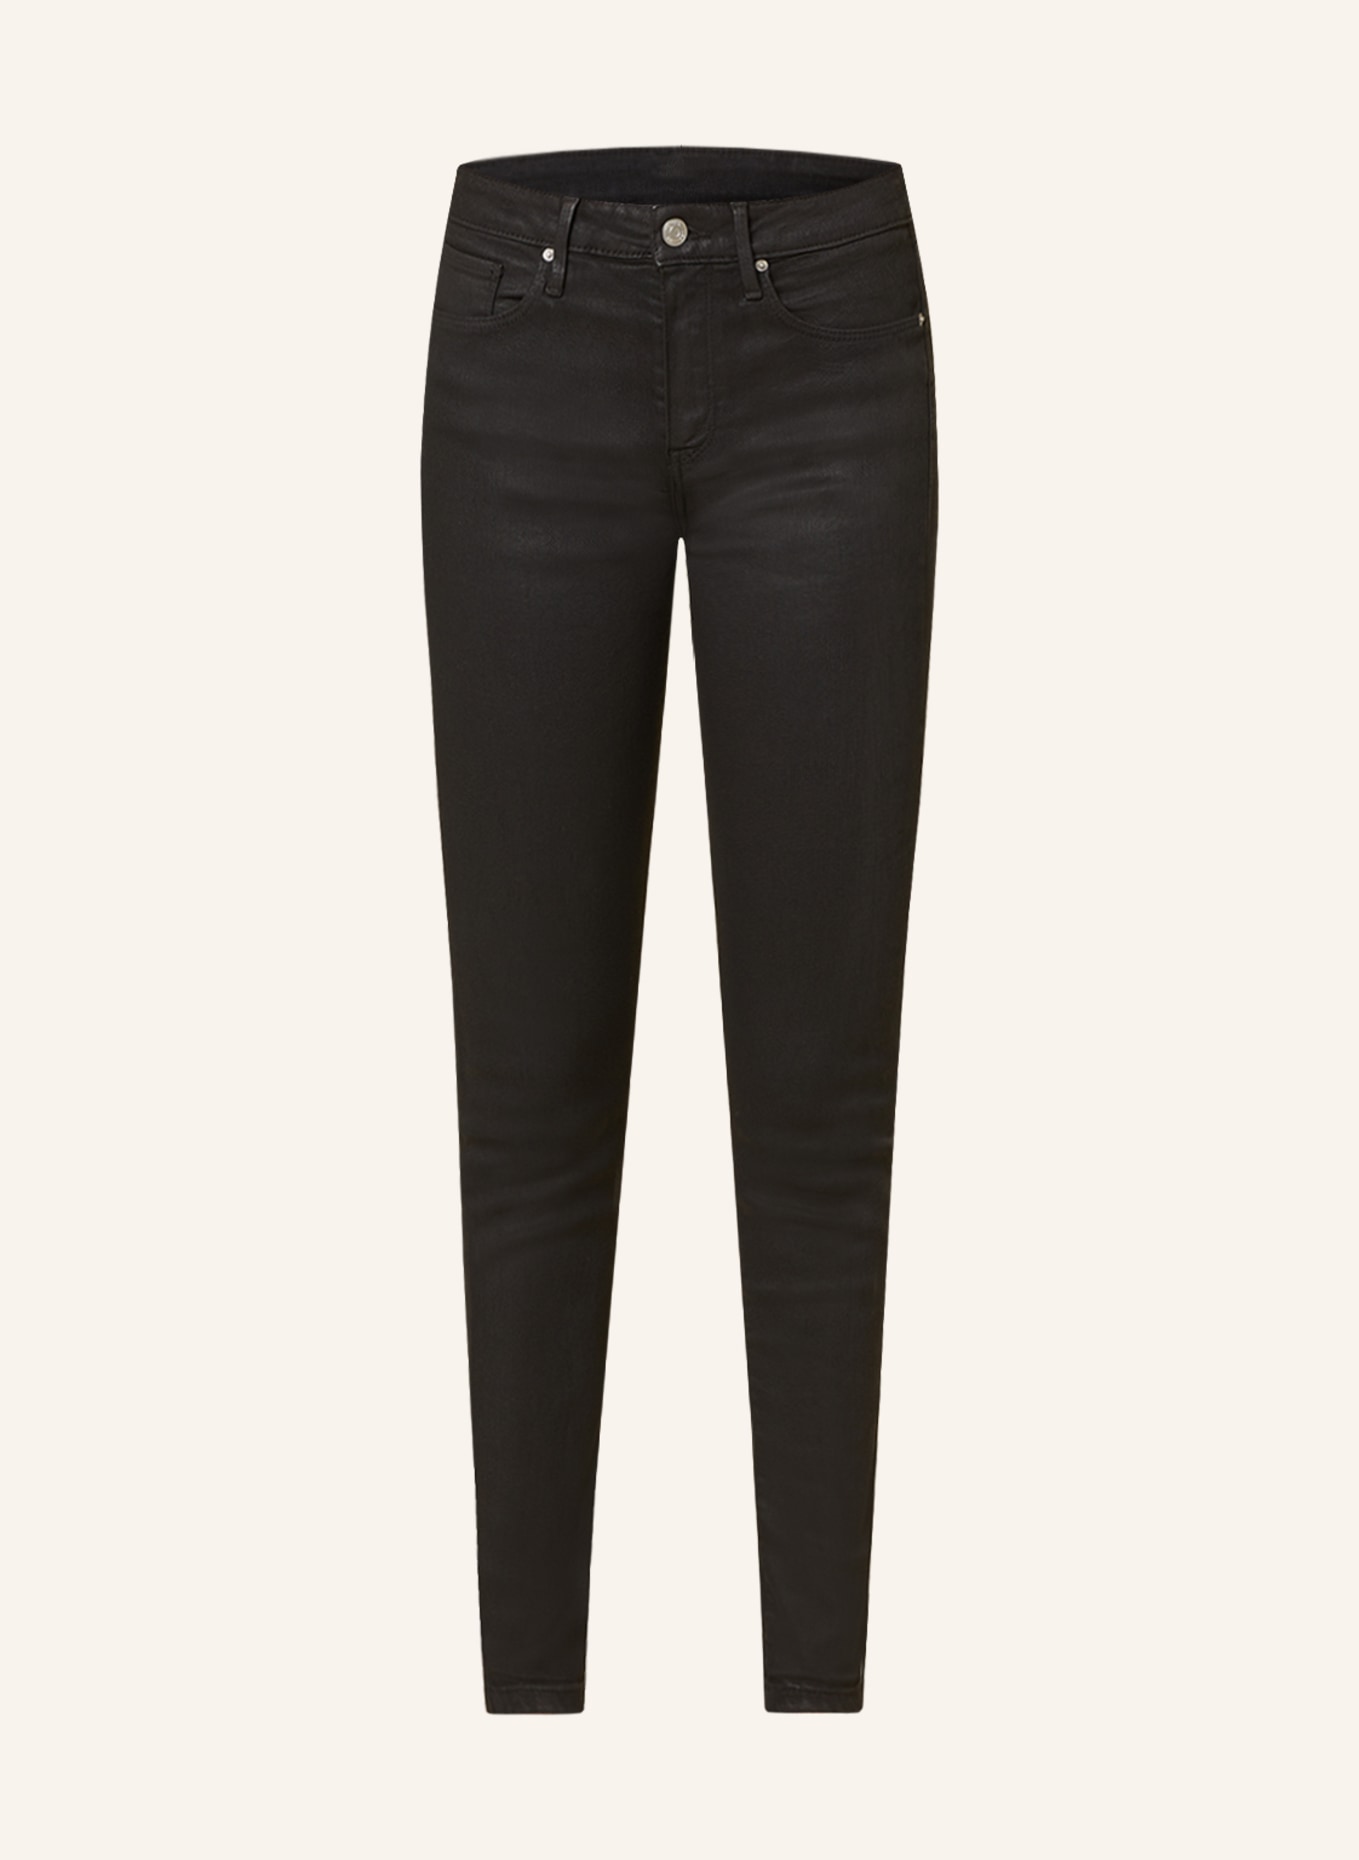 TOMMY HILFIGER Skinny Jeans COMO, Farbe: 1B0 Black Coated (Bild 1)